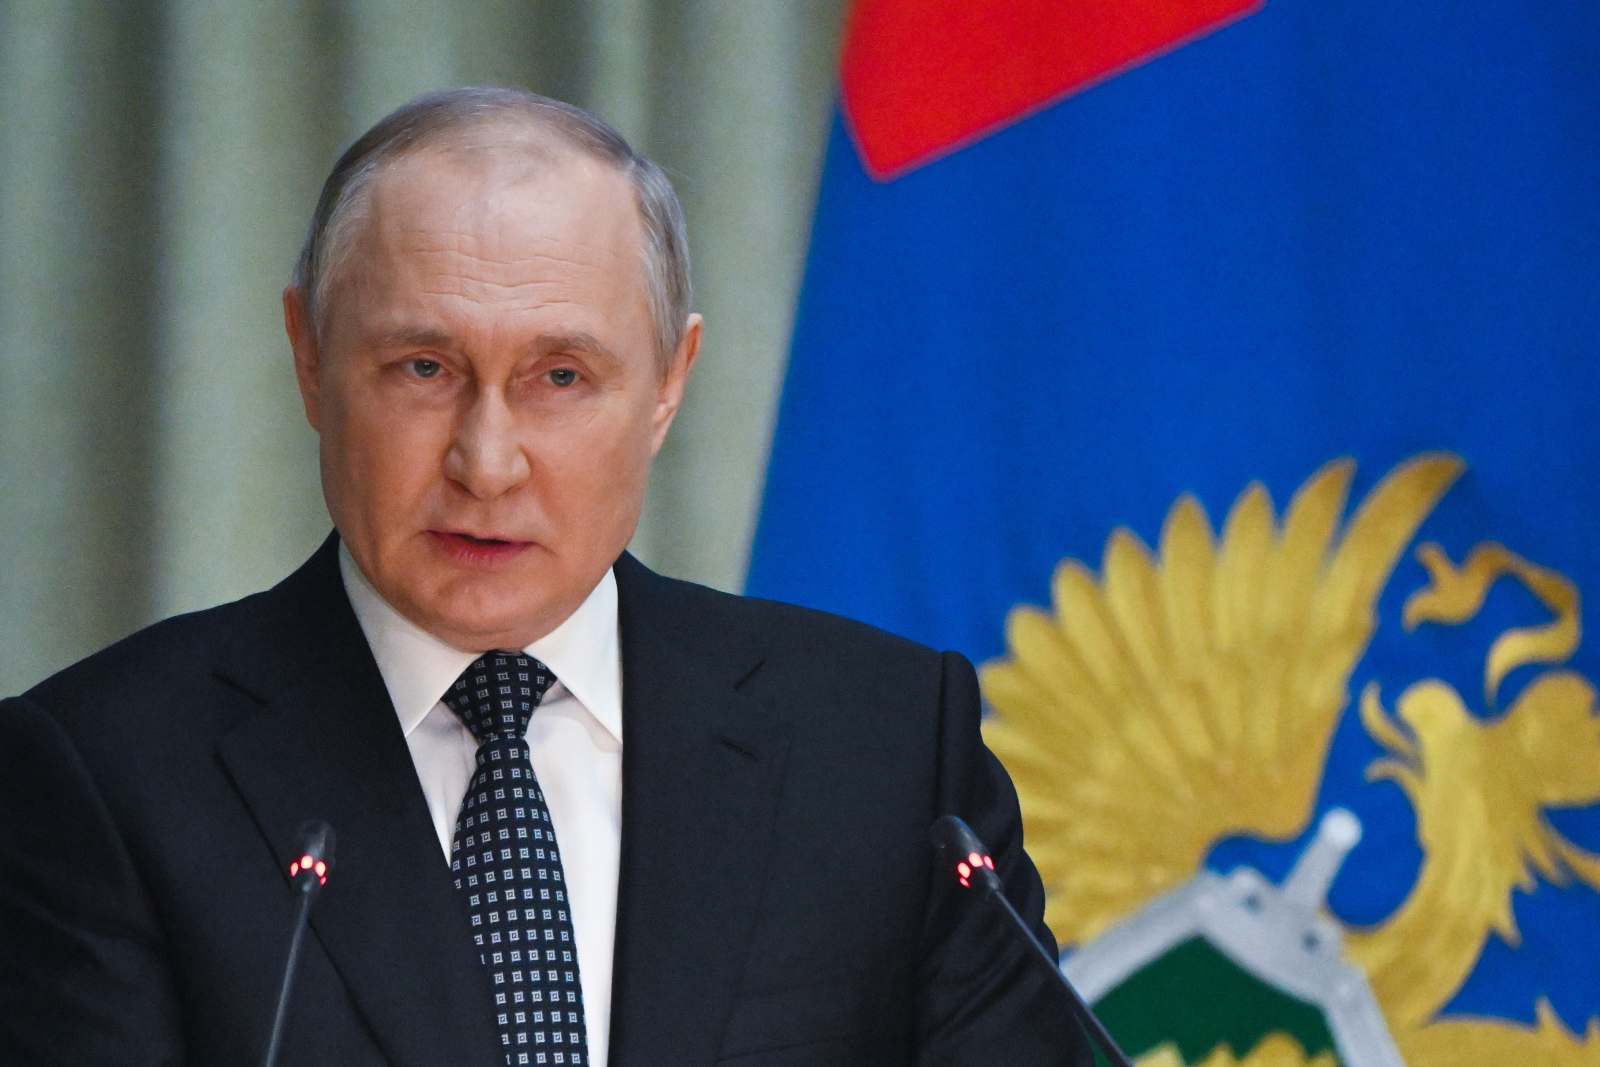 Vladimir Putin ‘survived assassination attempt’ soon after Ukraine invasion (theage.com.au)